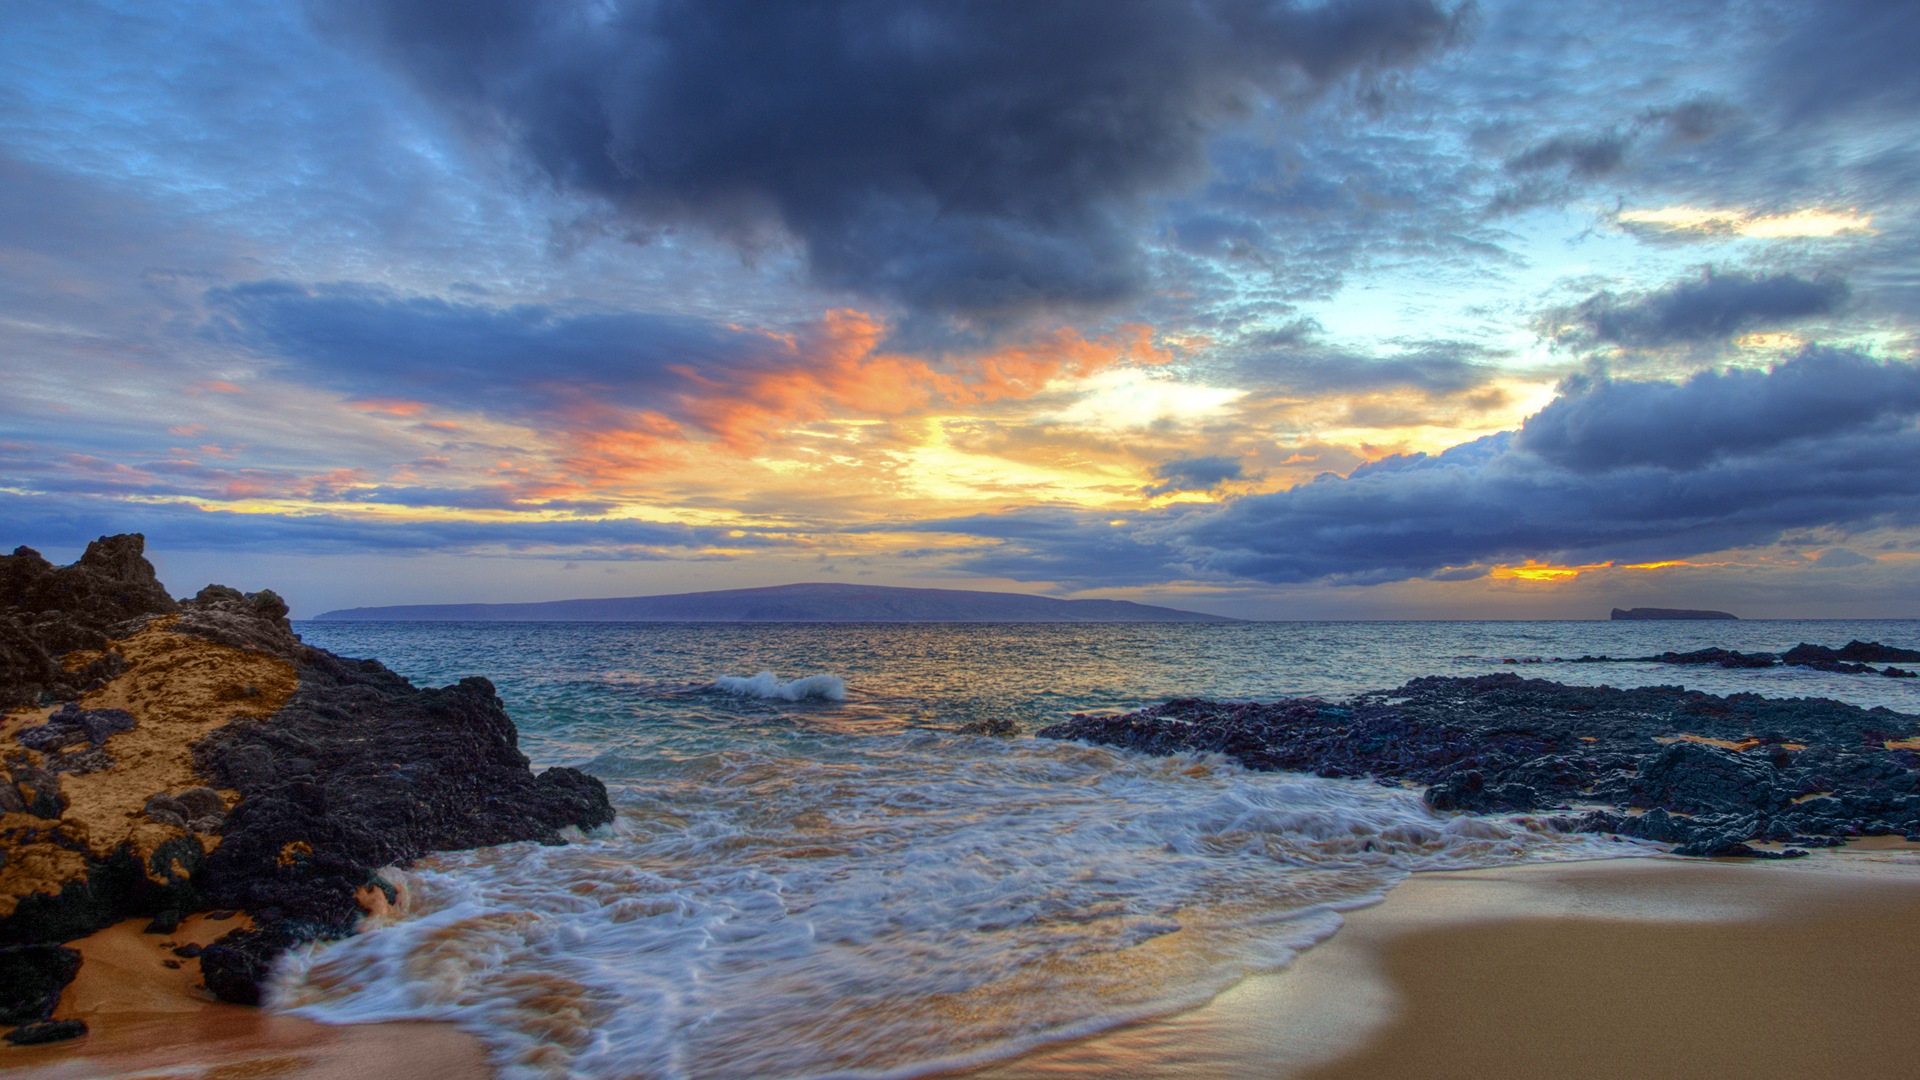 Windows 8 theme wallpaper: Beach sunrise and sunset views #9 - 1920x1080